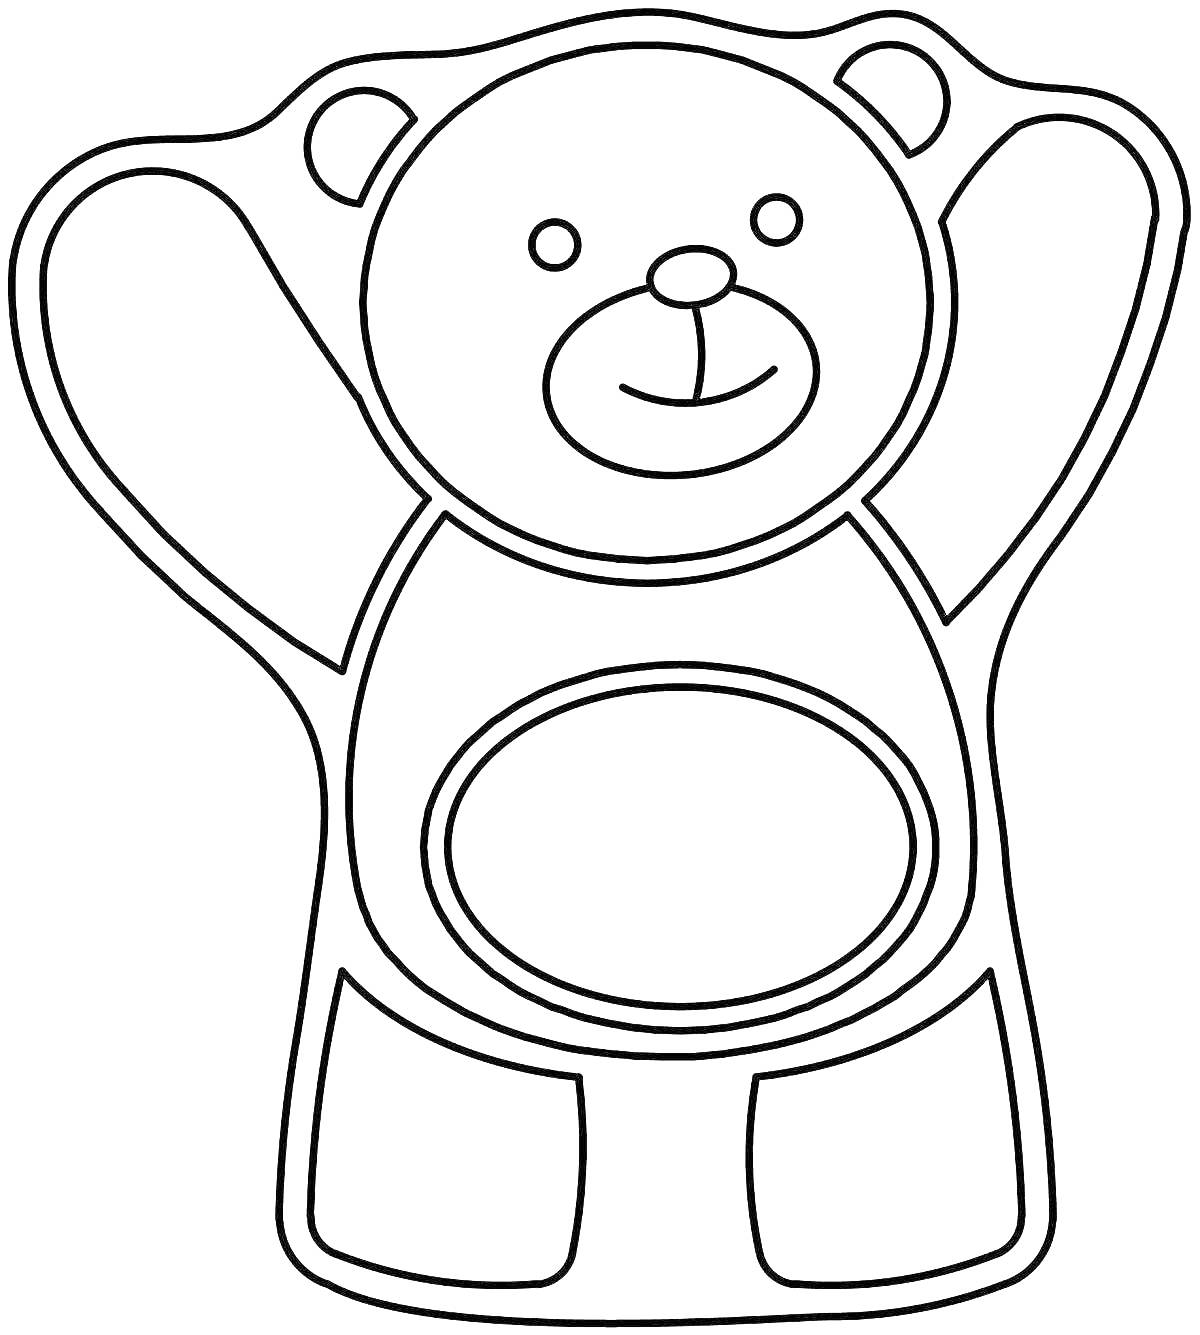 Раскраска Медвежонок с поднятыми лапами